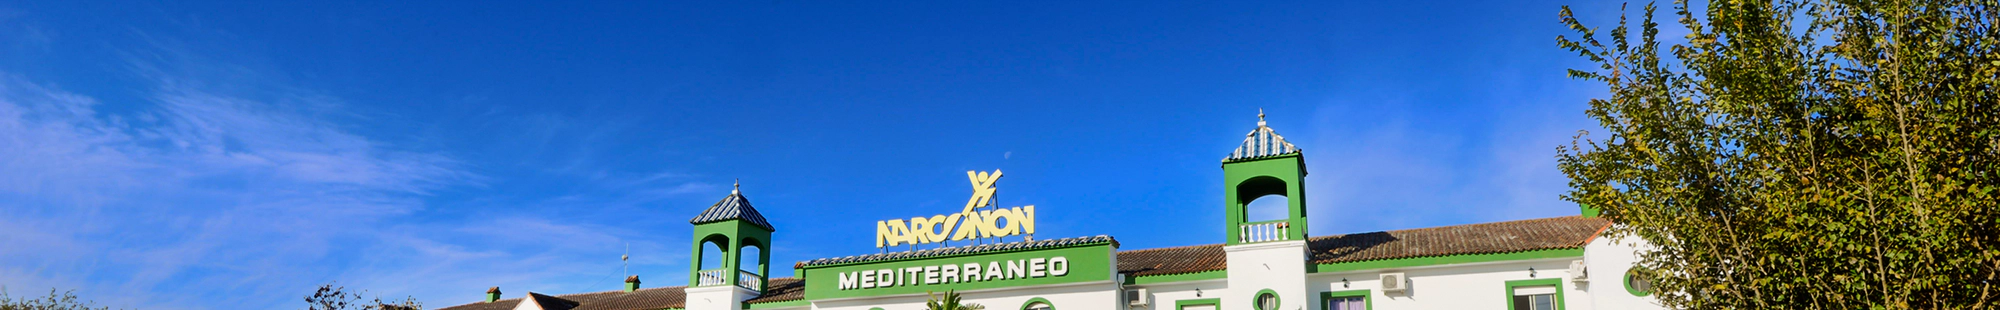 Narconon Mediterraneo